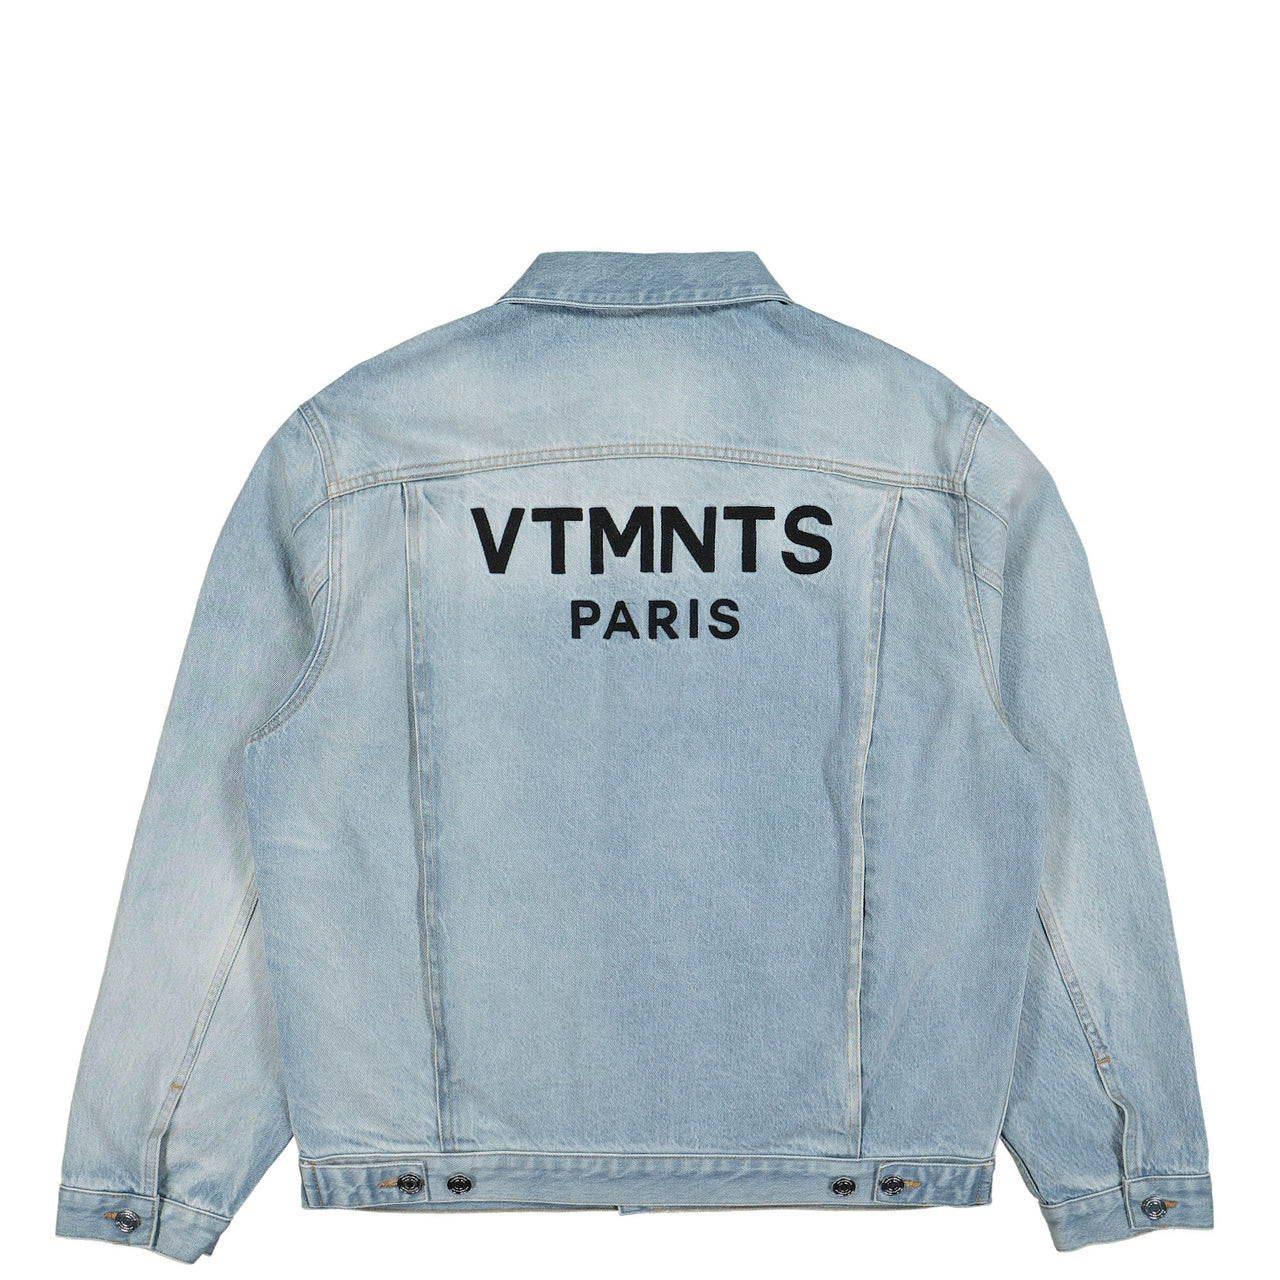 Embroidered VTMNTS Paris Denim Jacket